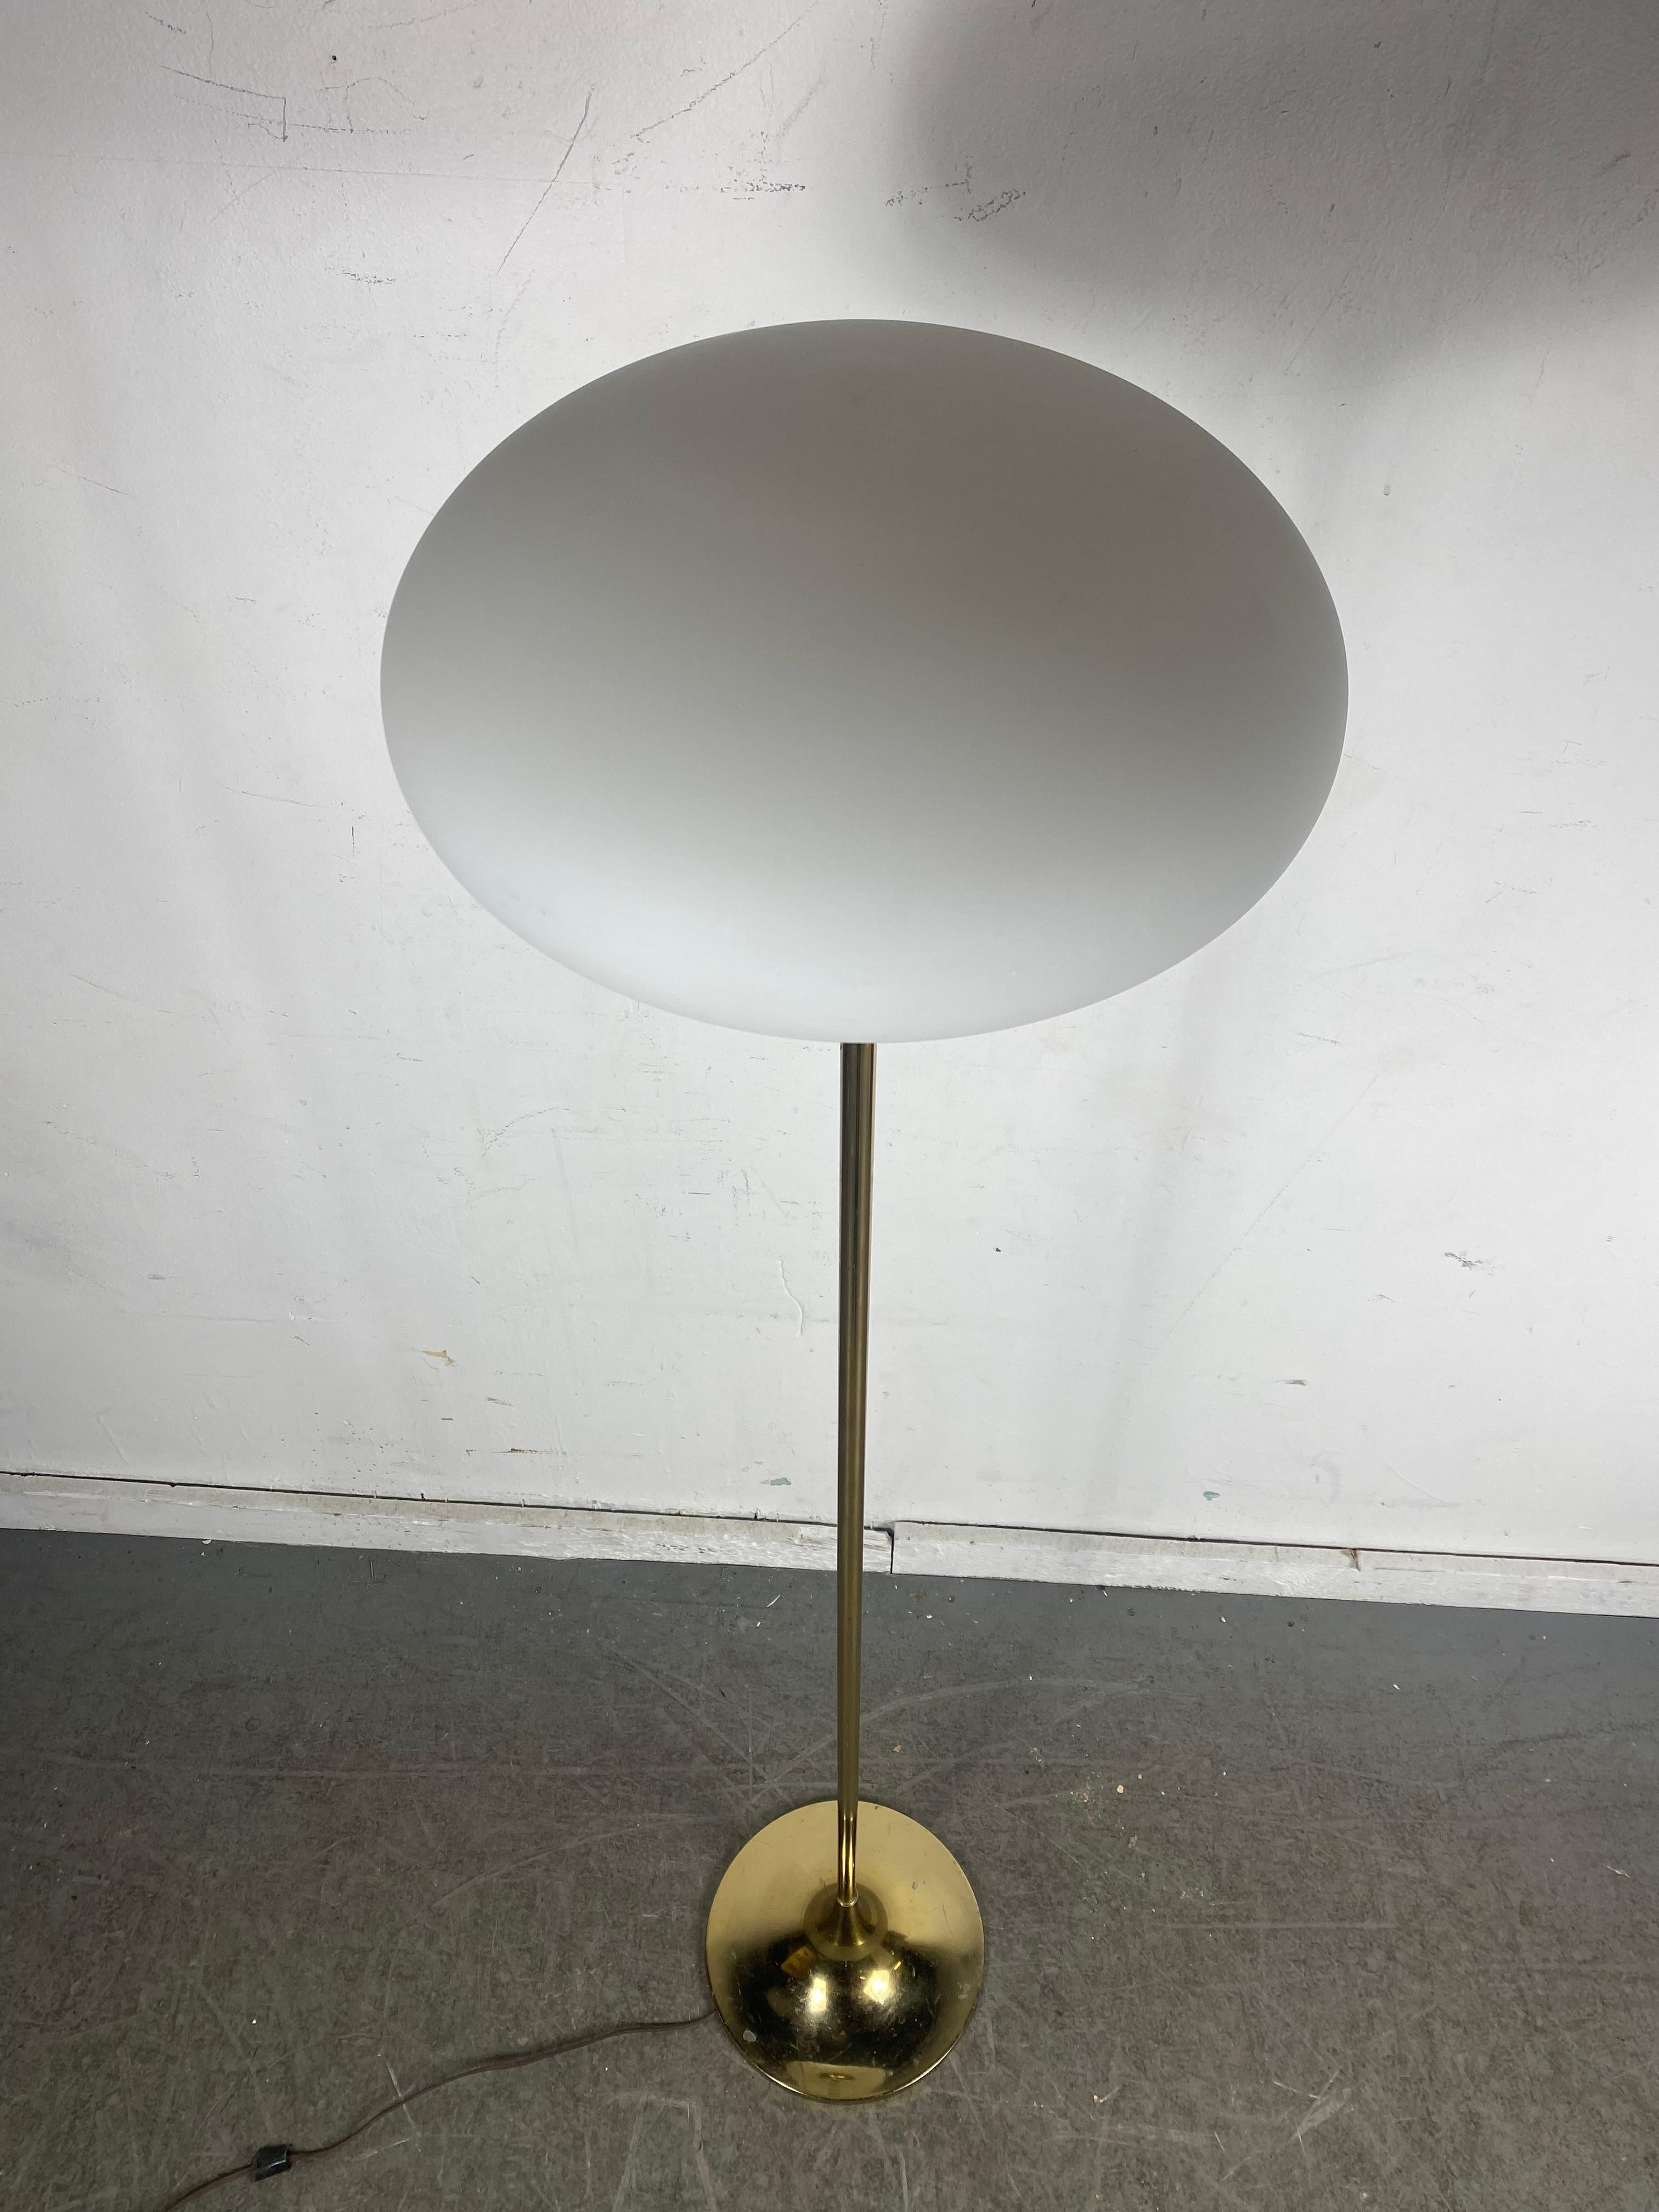 Iconic 1960s floor lamp by Laurel, Gold /Brass standard, Blown Glass Mushroom Shade. Classic design, Nice original condition.